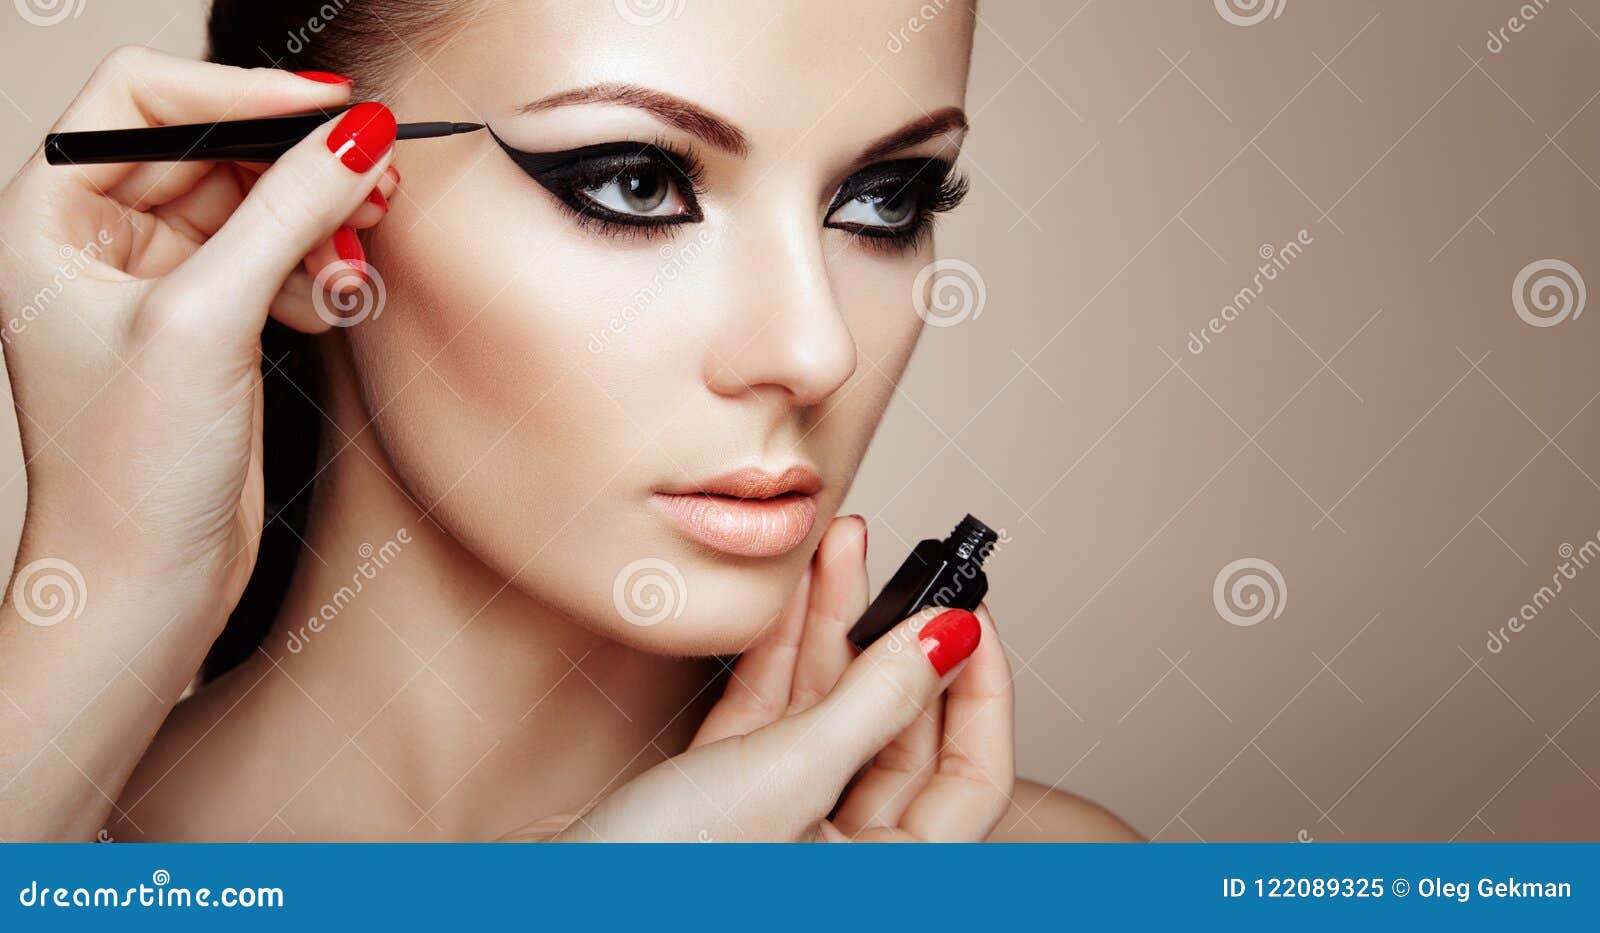 makeup artist applies eyeshadow